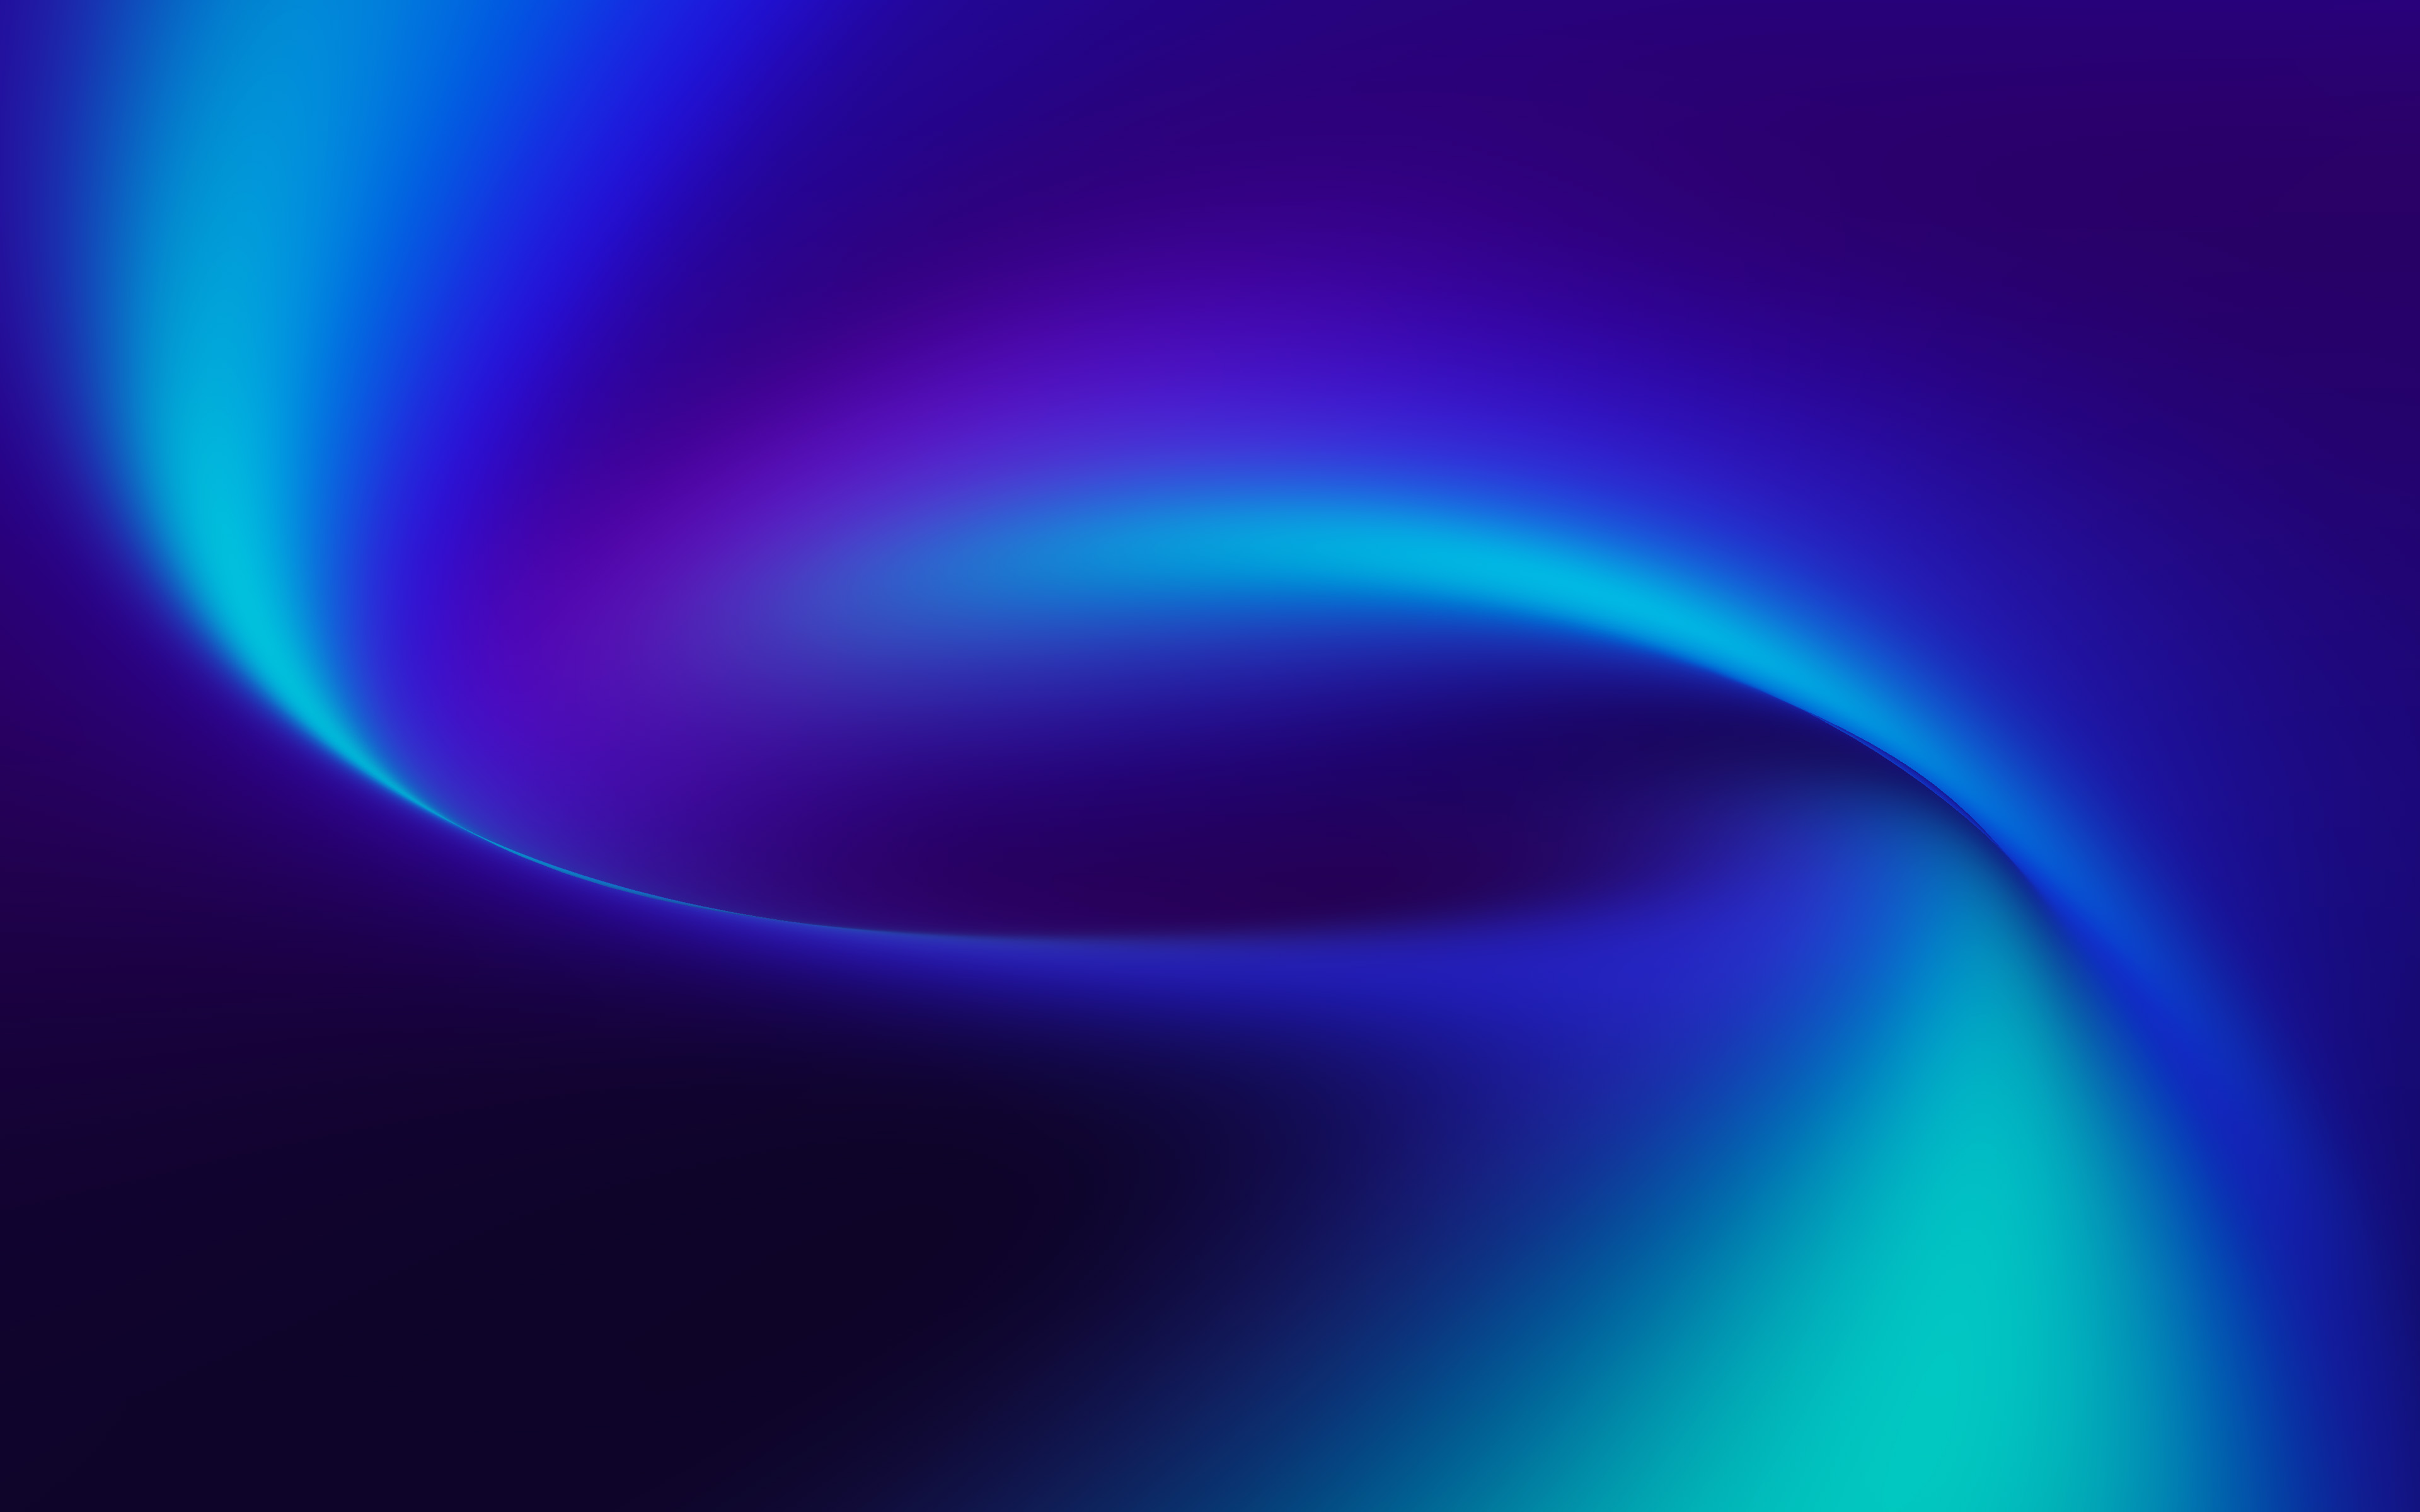 Download wallpapers 4k, blue abstract waves, vortex, 3D art, blue wavy ...